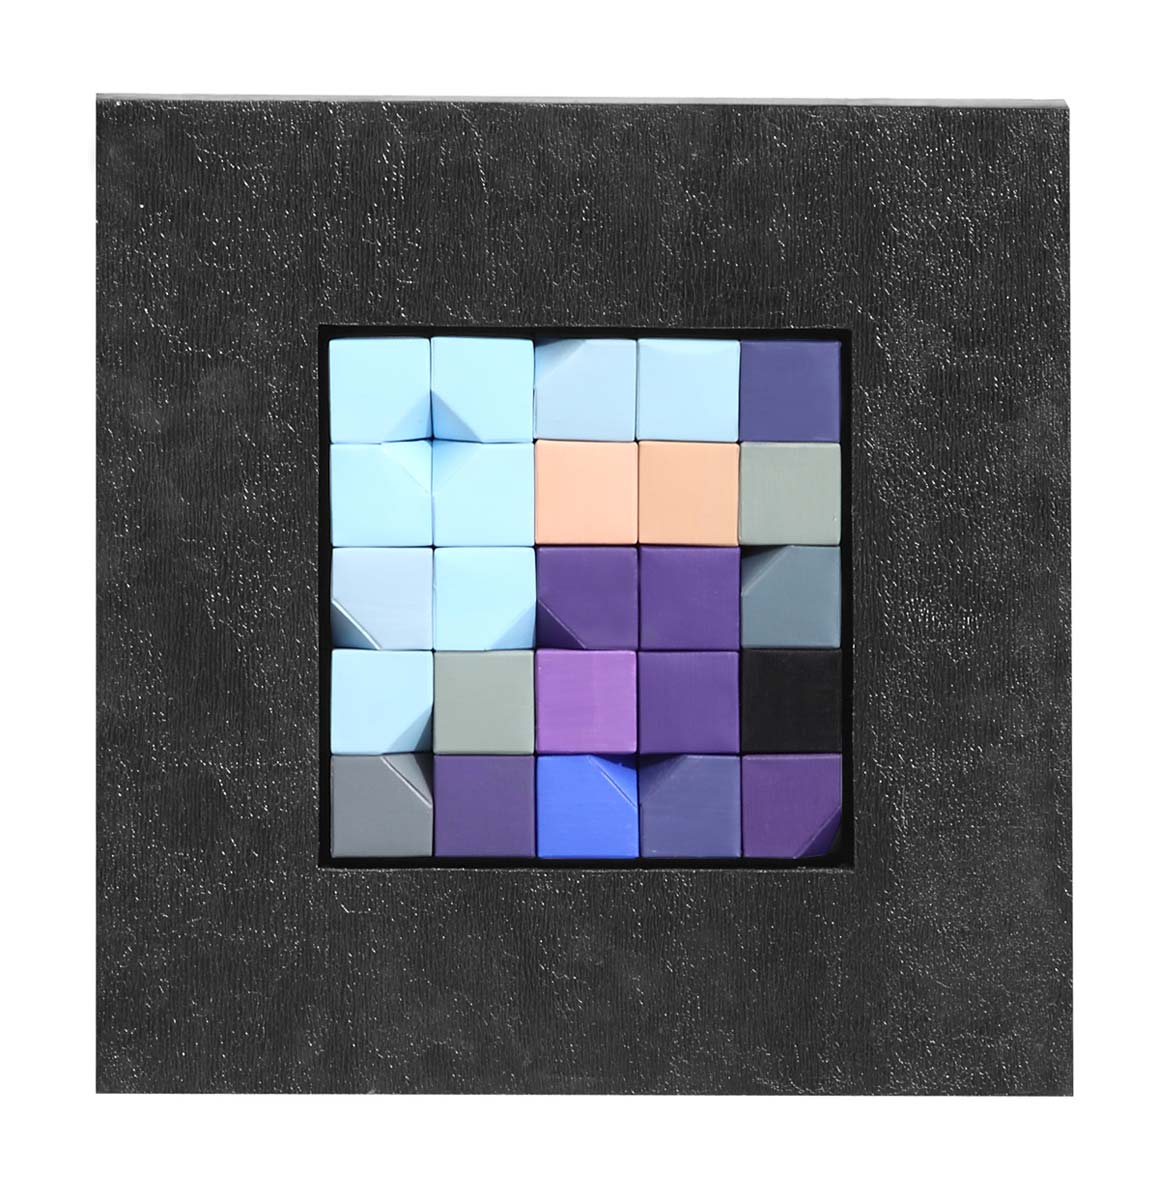 Zuo Modern Puzzle Wall Art - Black frame